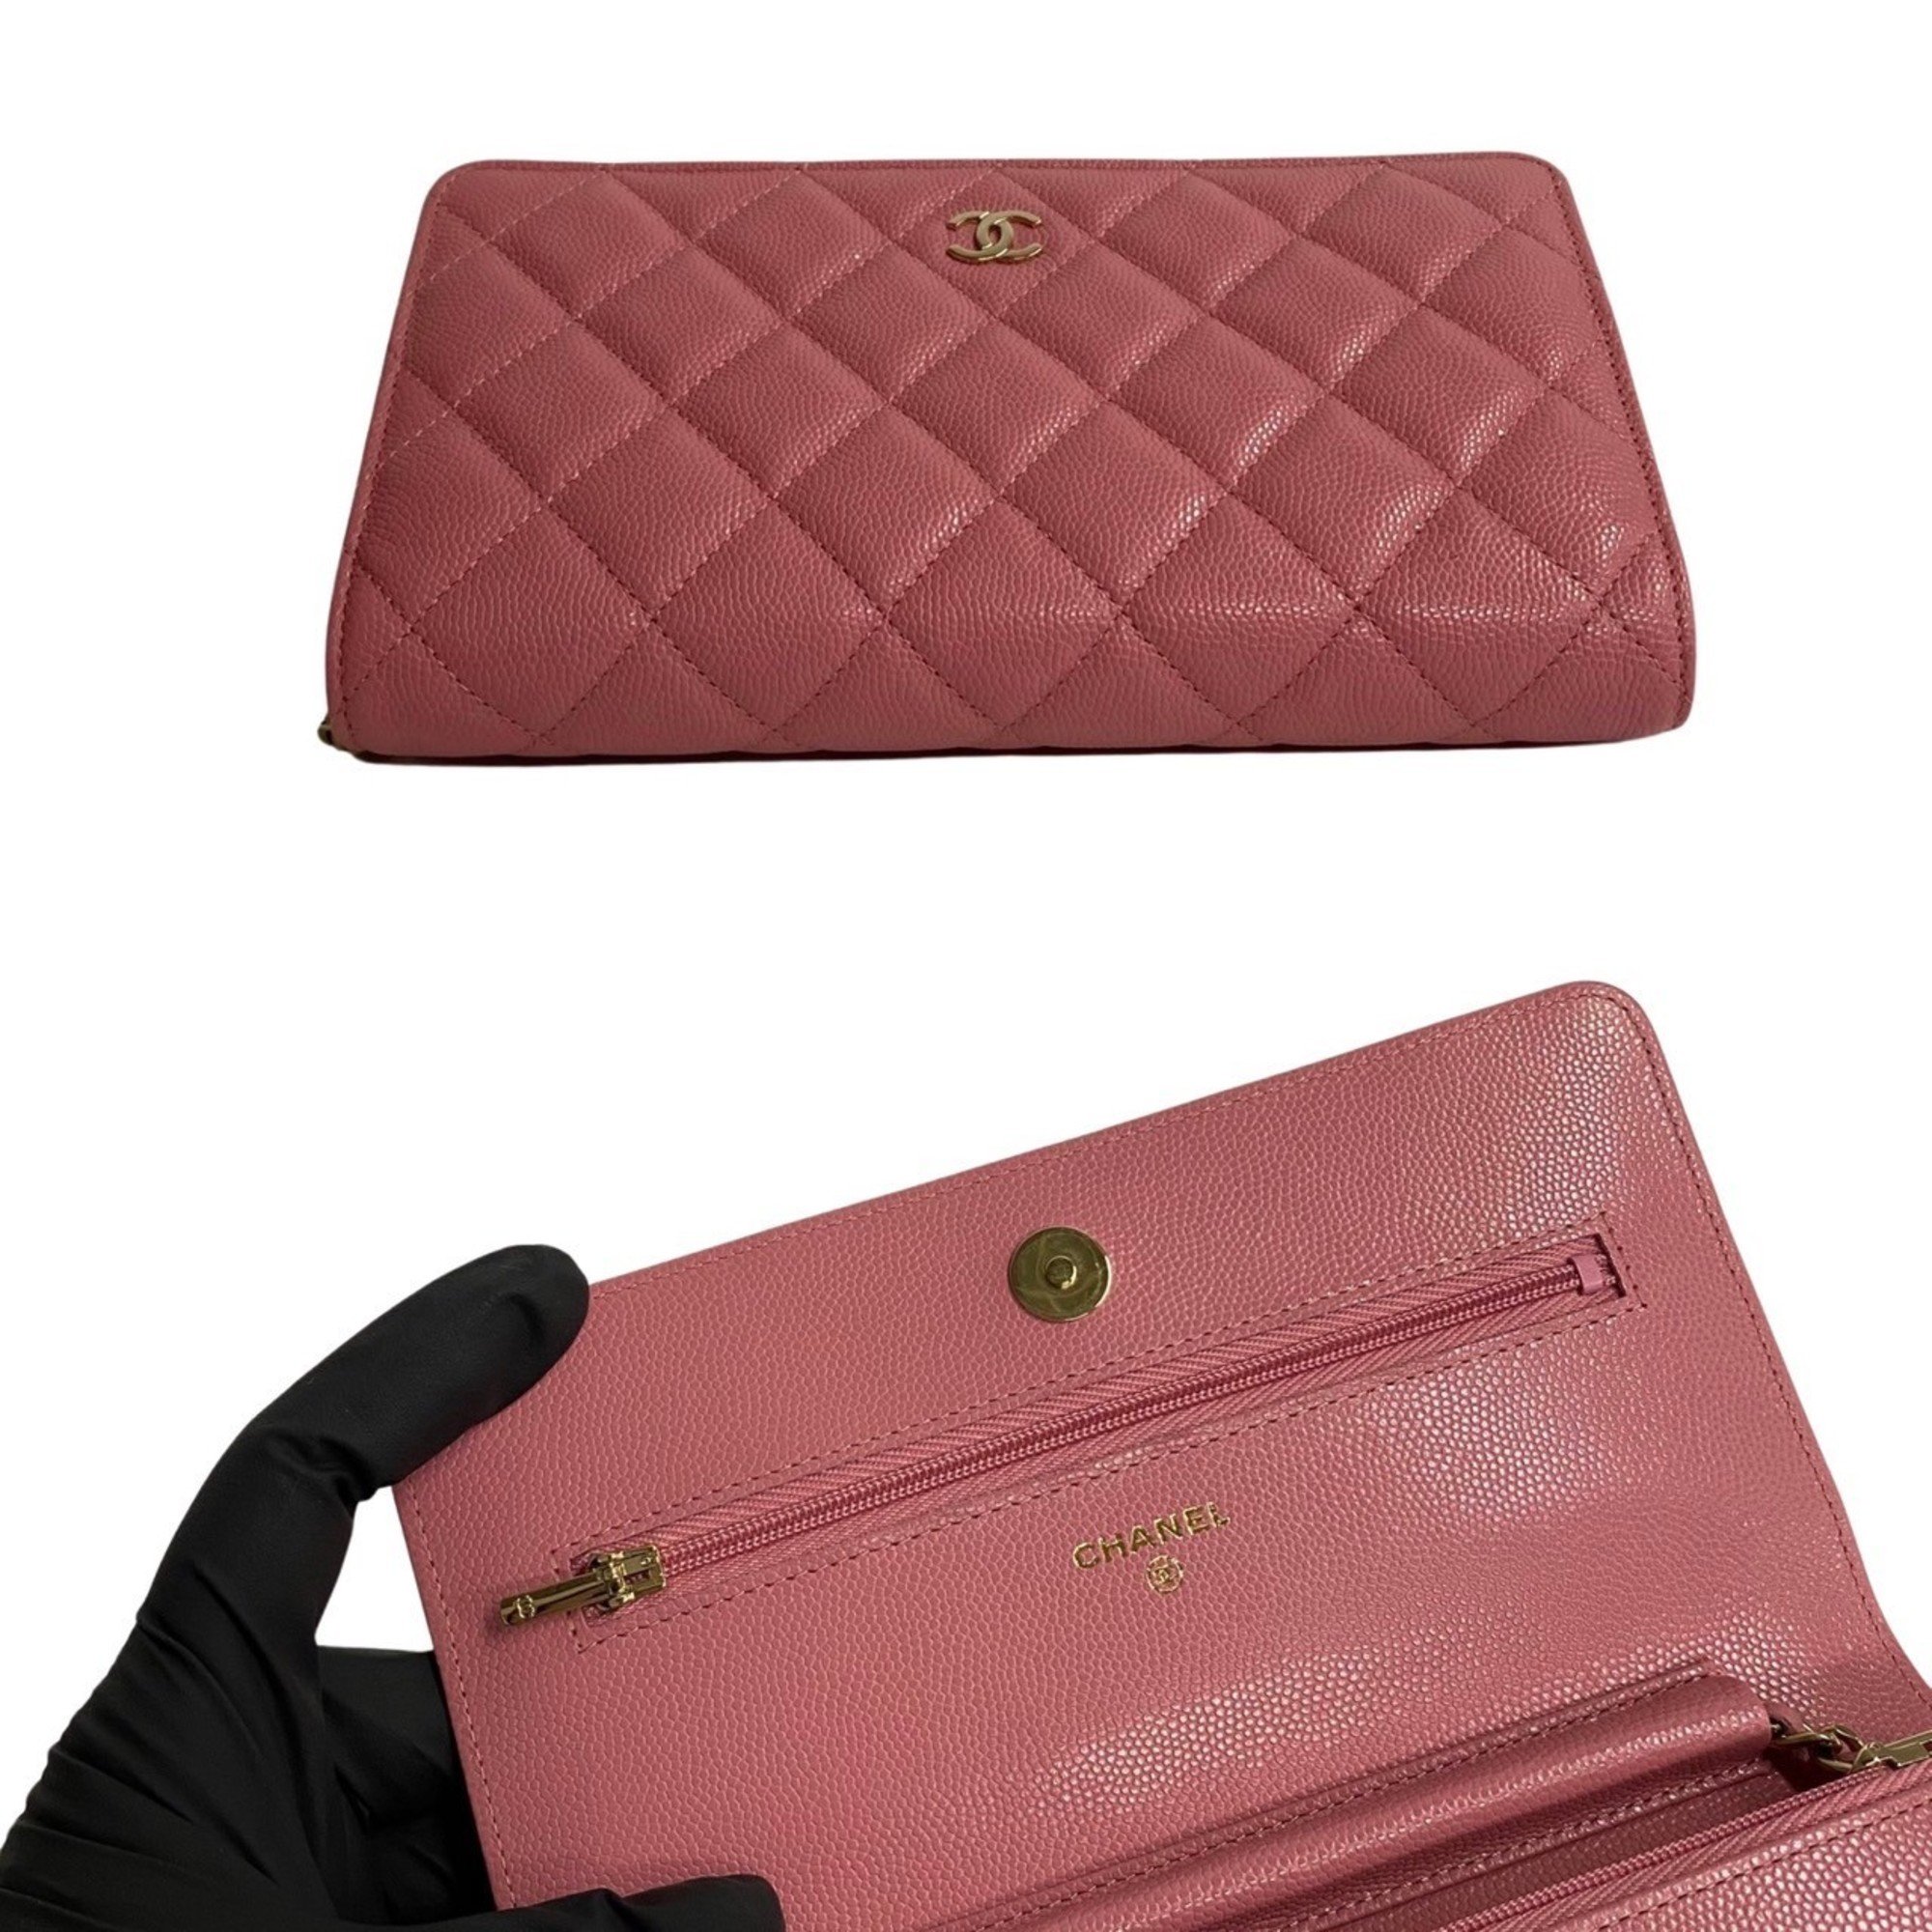 CHANEL Caviar Skin Matelasse Leather Chain Shoulder Bag Wallet Pink 15560